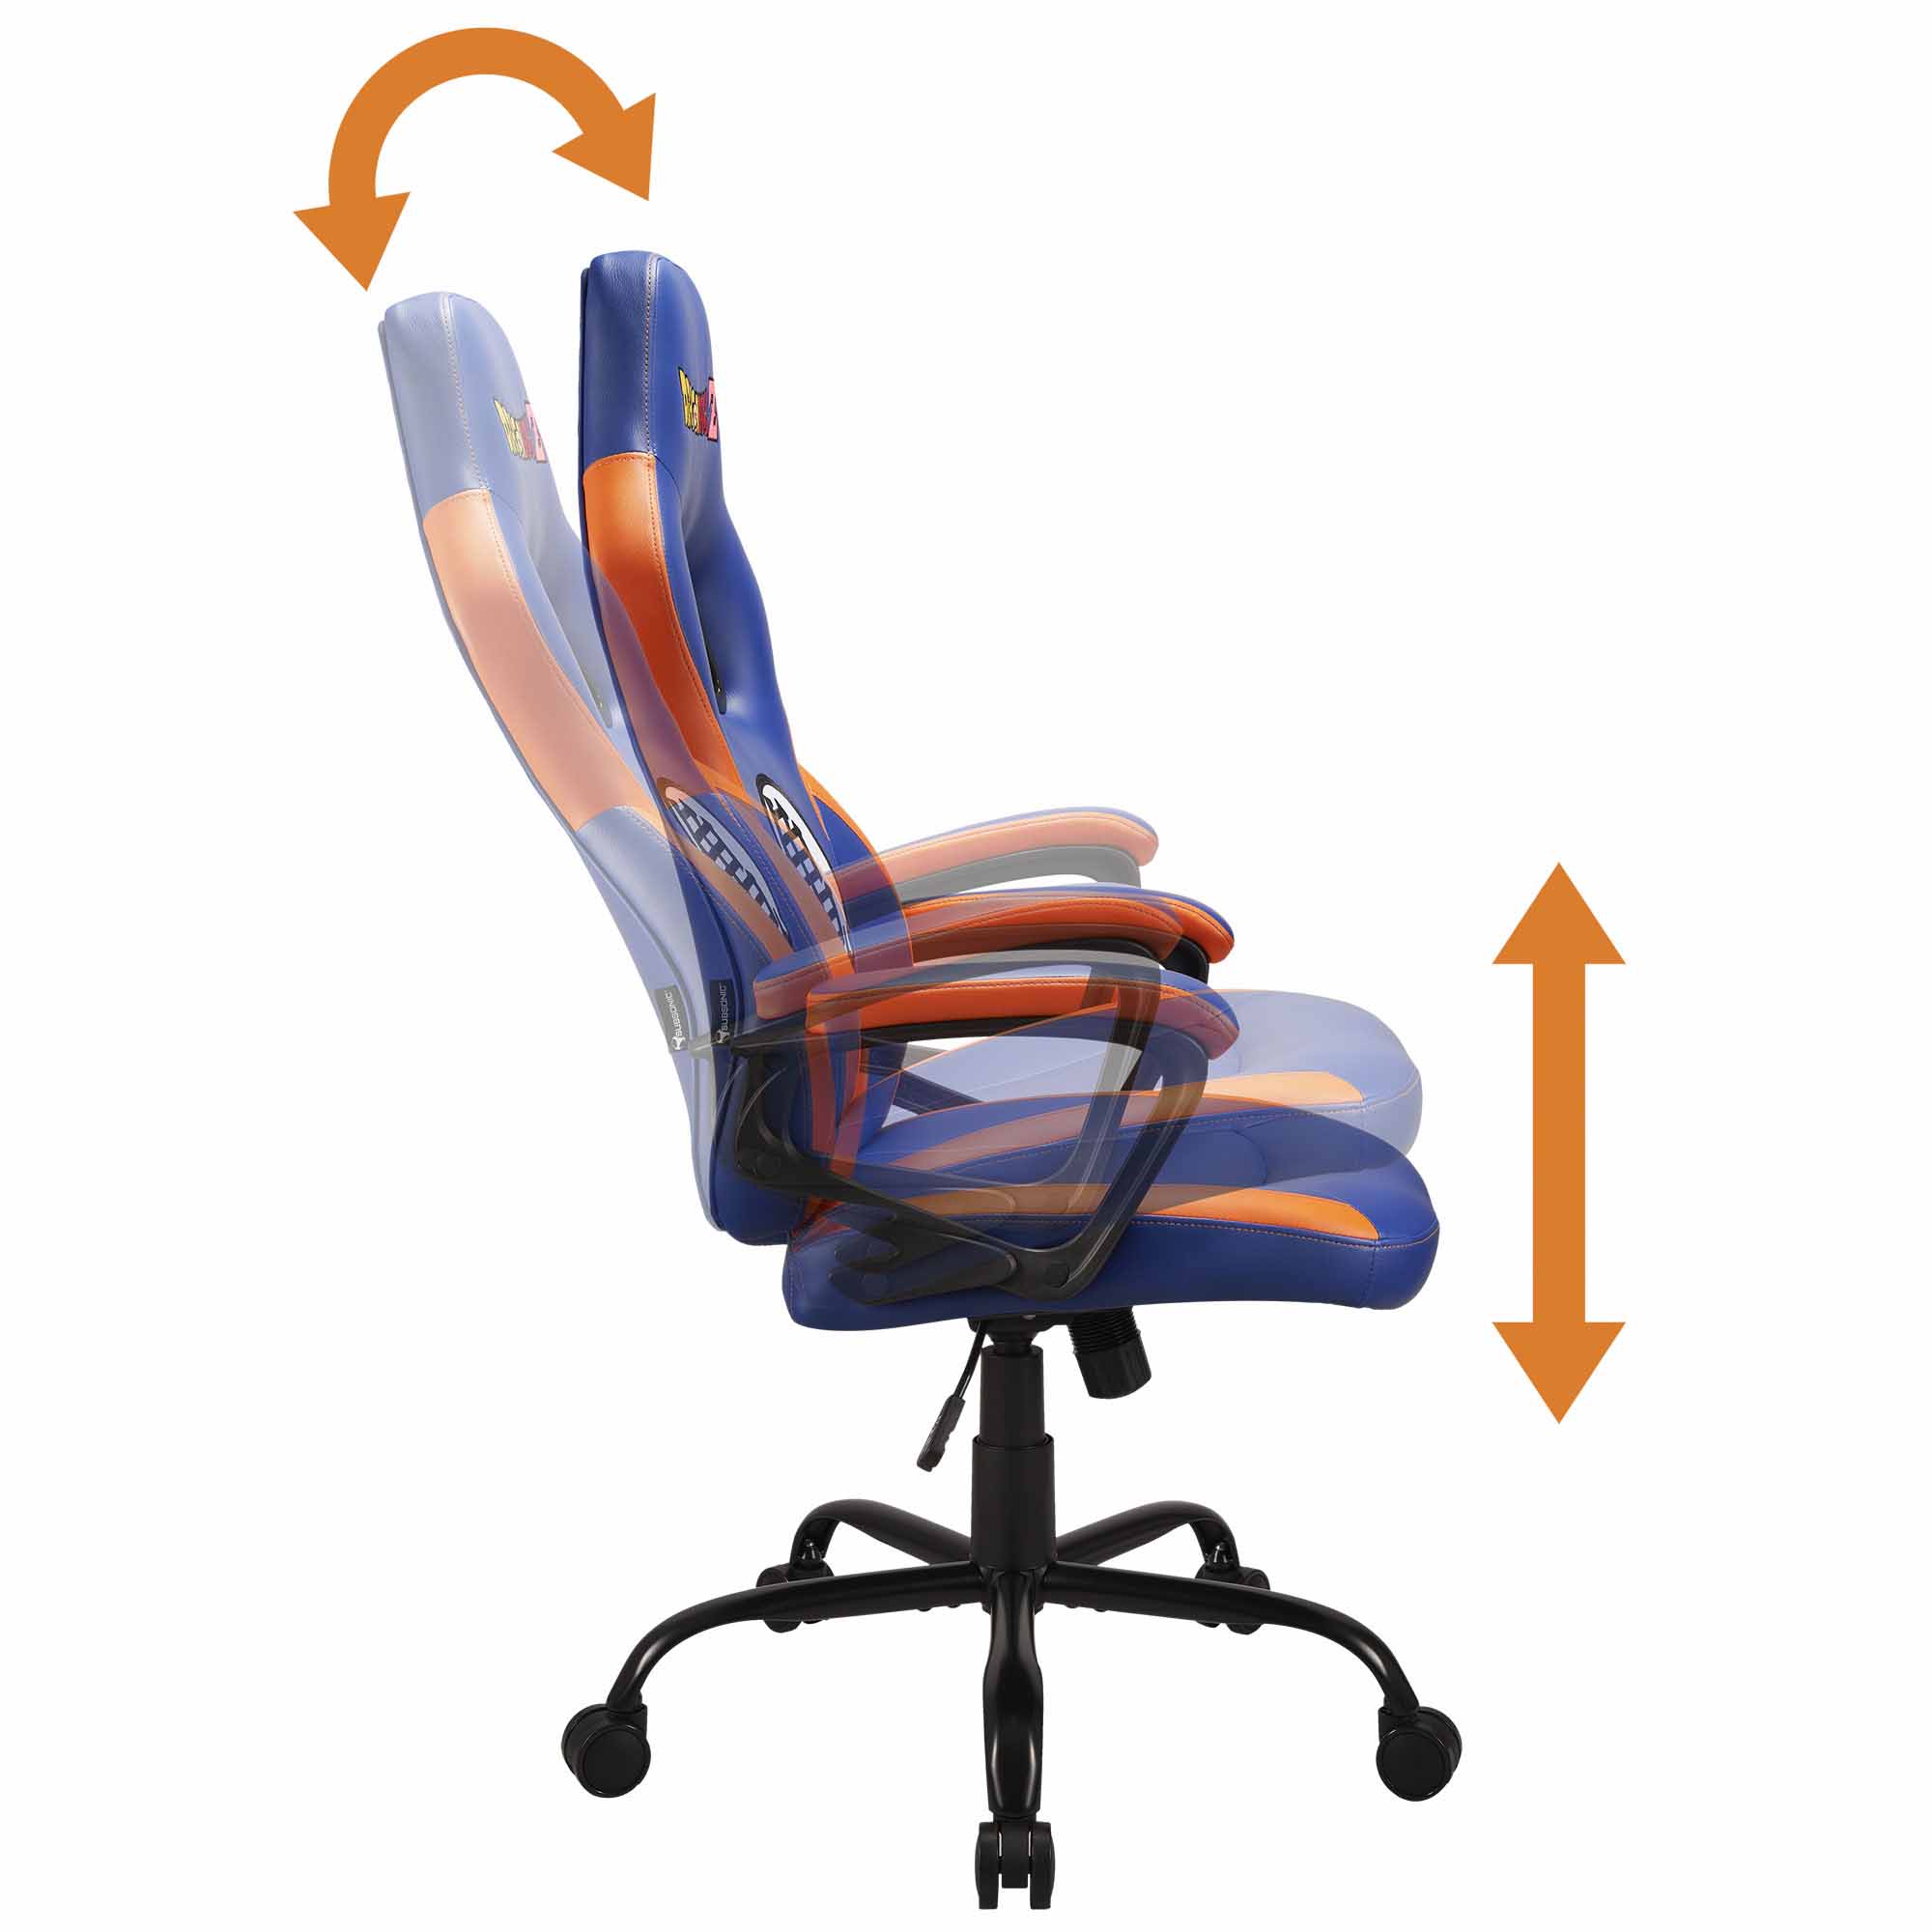 Dragon Ball Z gaming chair | Subsonic